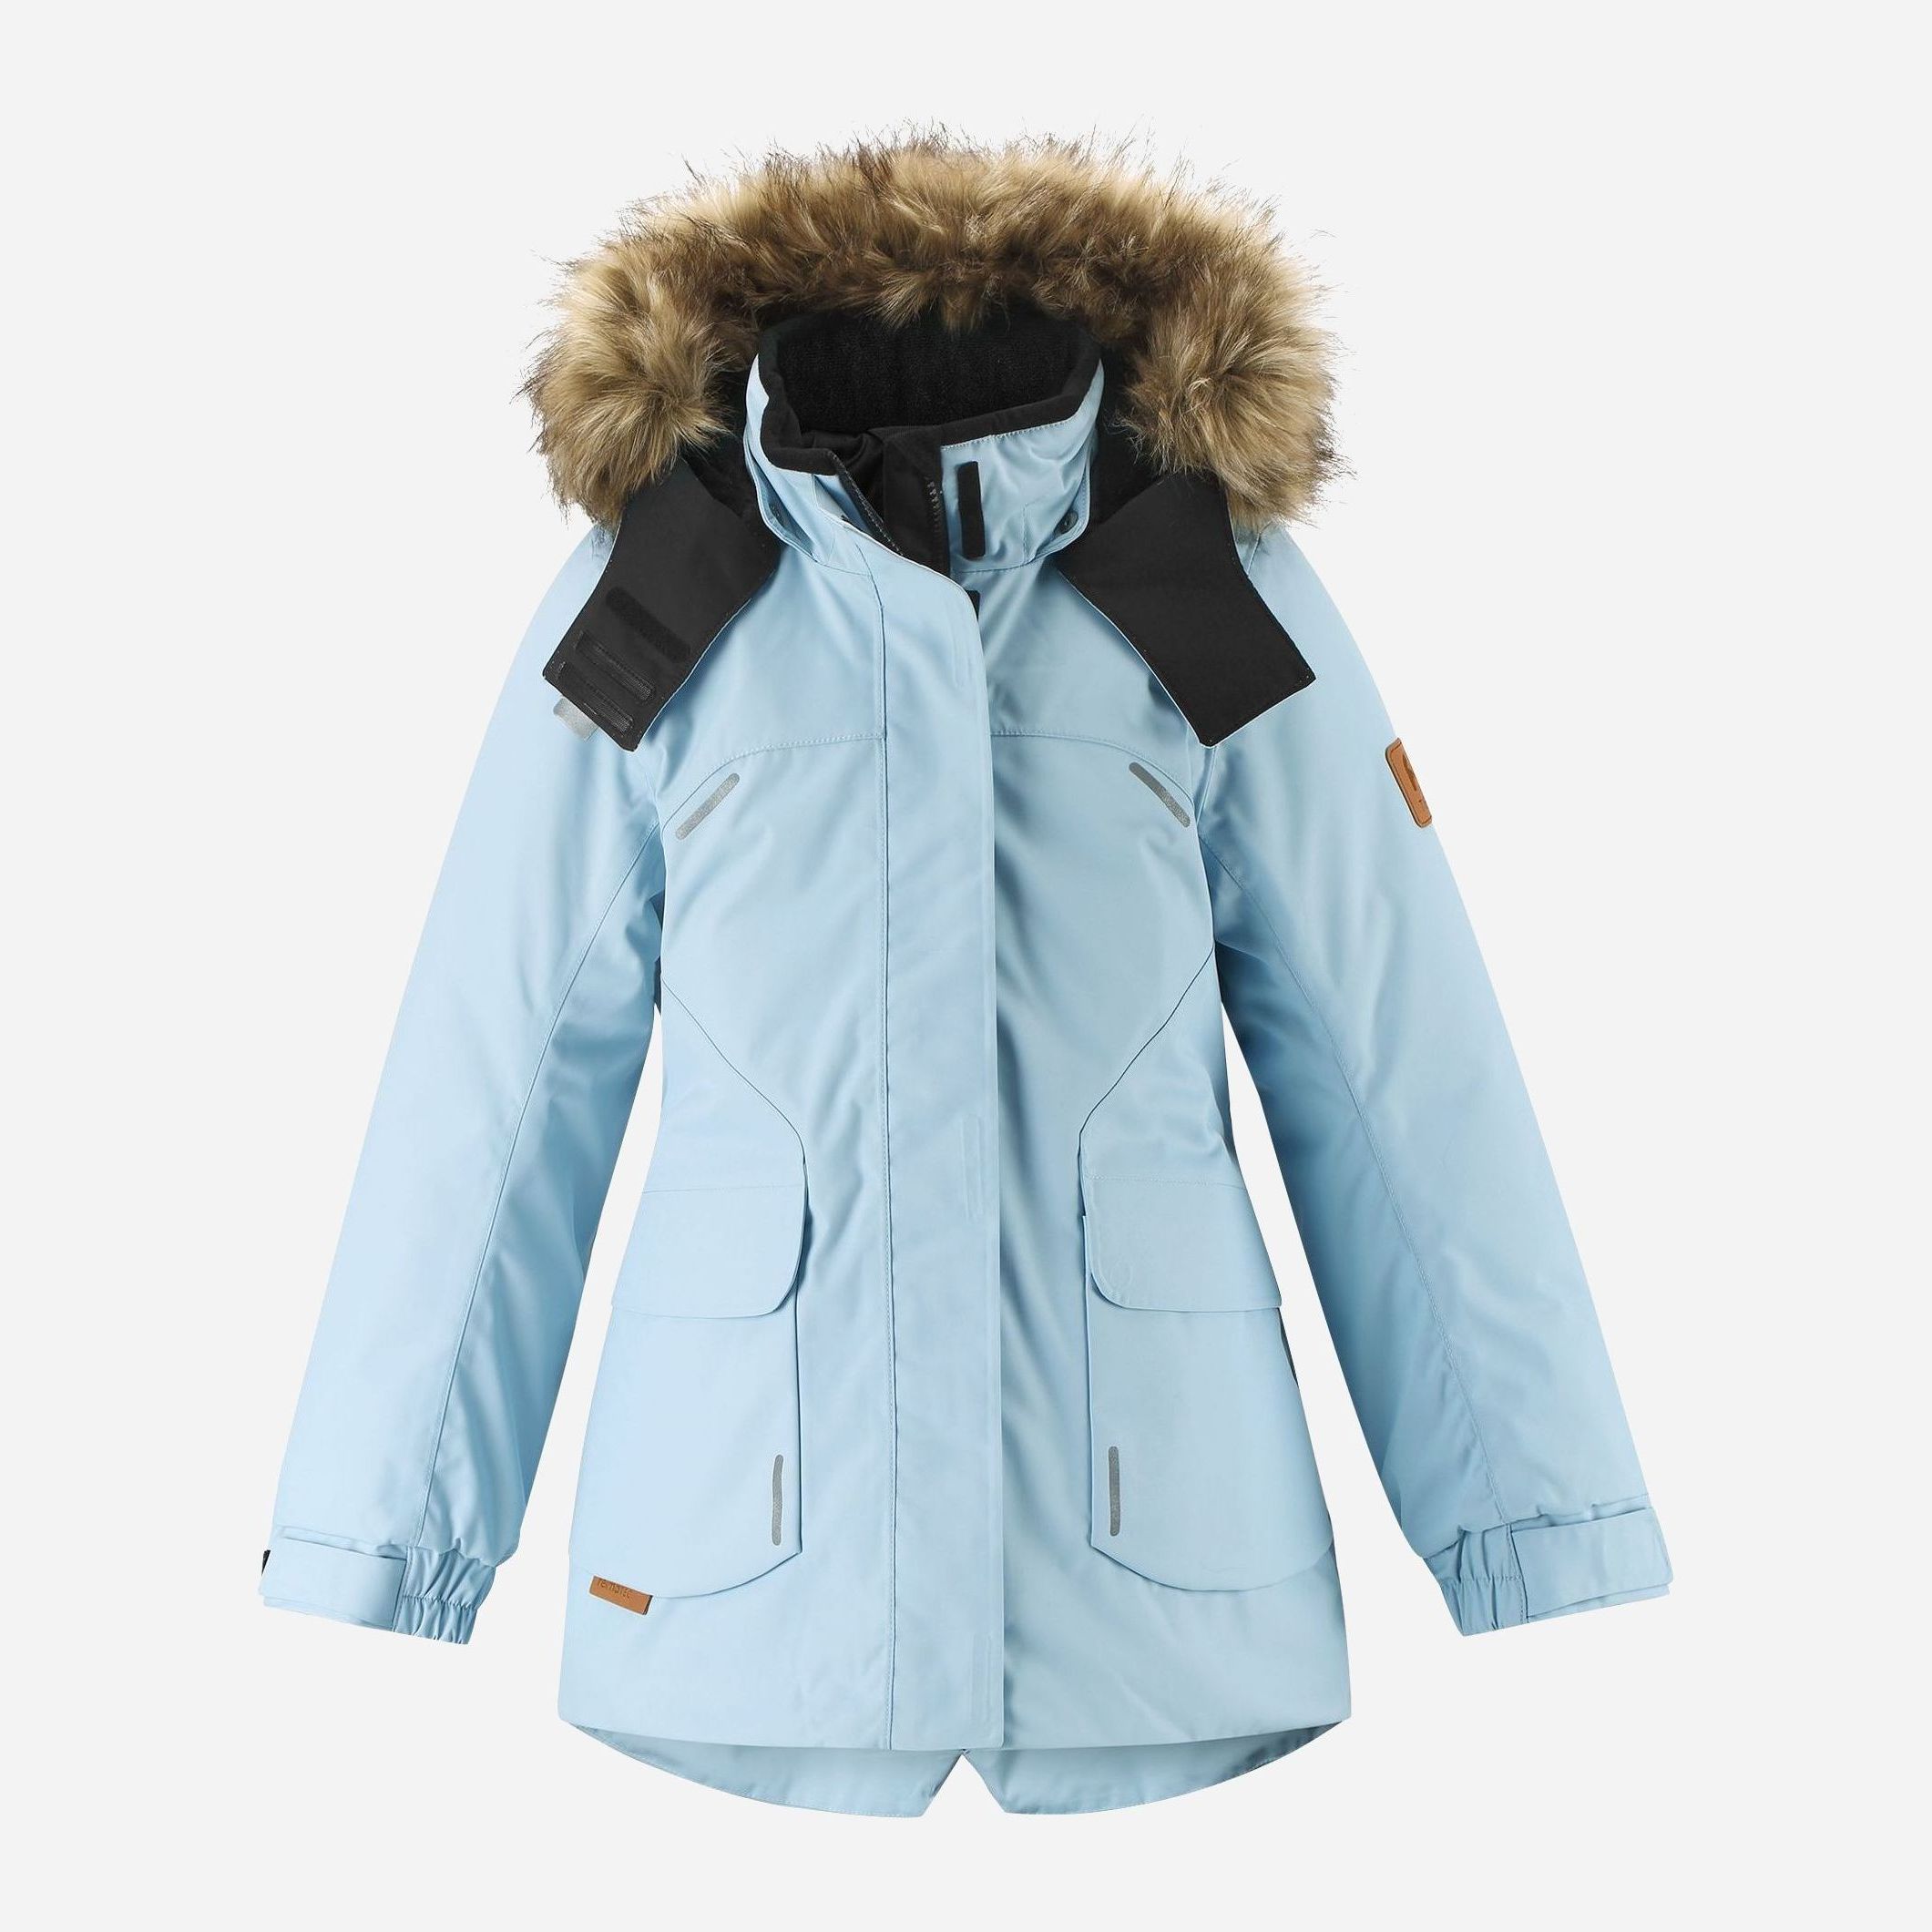 Акция на Дитяча зимова термо куртка-парка для дівчинки Reima Sisarus 531376-6180 116 см от Rozetka